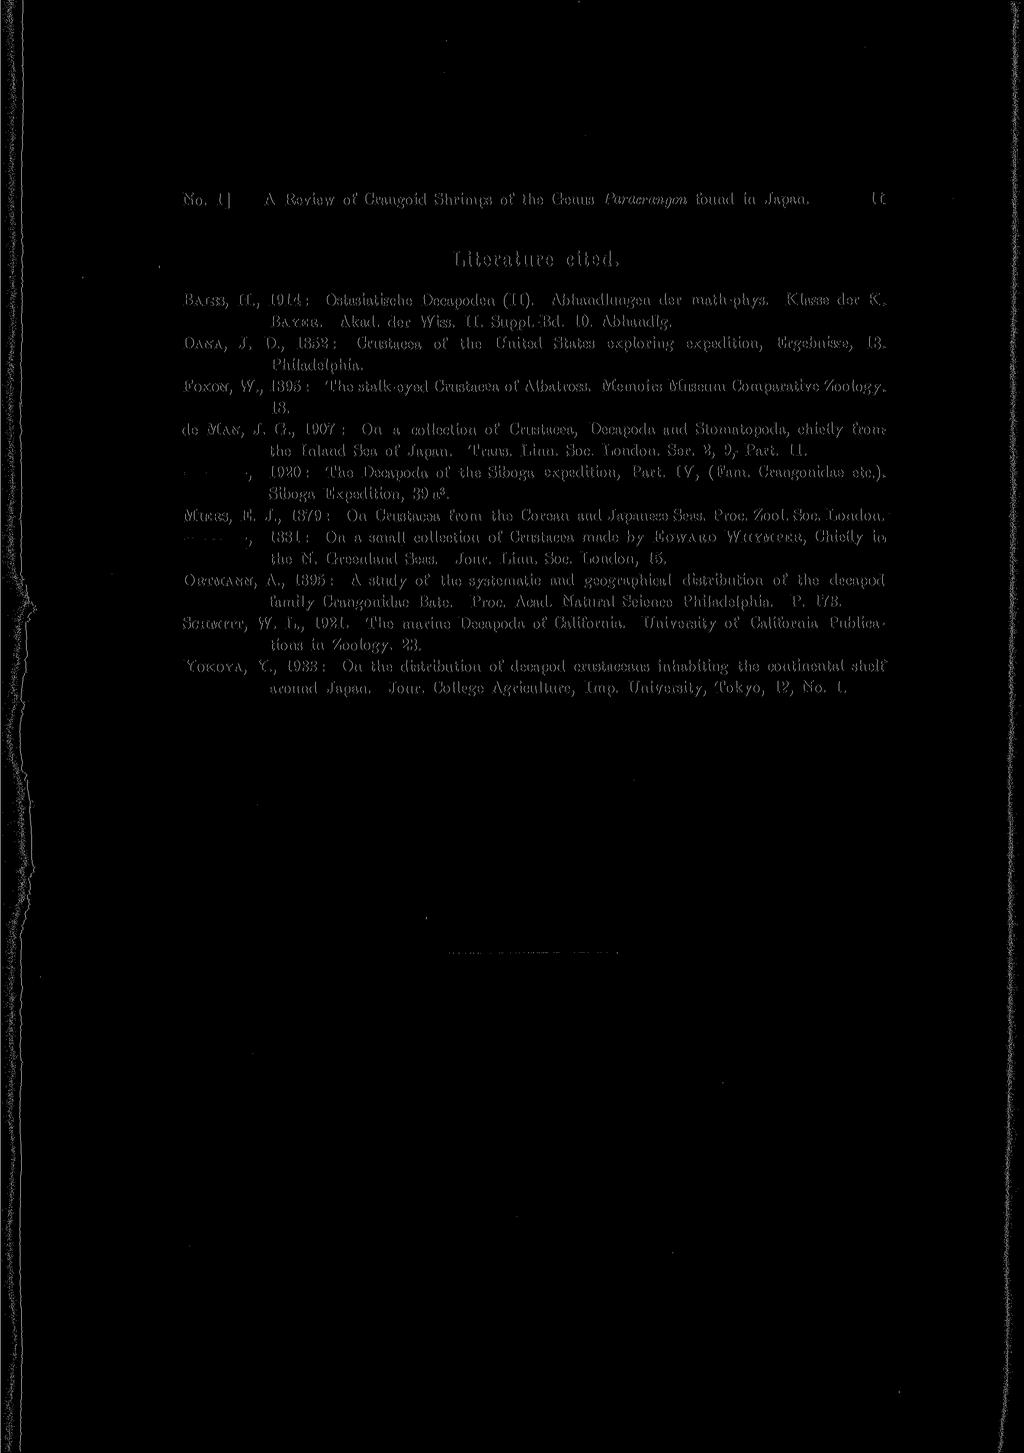 No. 1] A Review of Crangoid Shrimps of the Genus Paracrangon found in Japan. II Literature cited. BALSS, II., 1914: Ostasiatische Decapoden (II). Abhandlungen der math-phys. Kla. c se der K. BAYER.